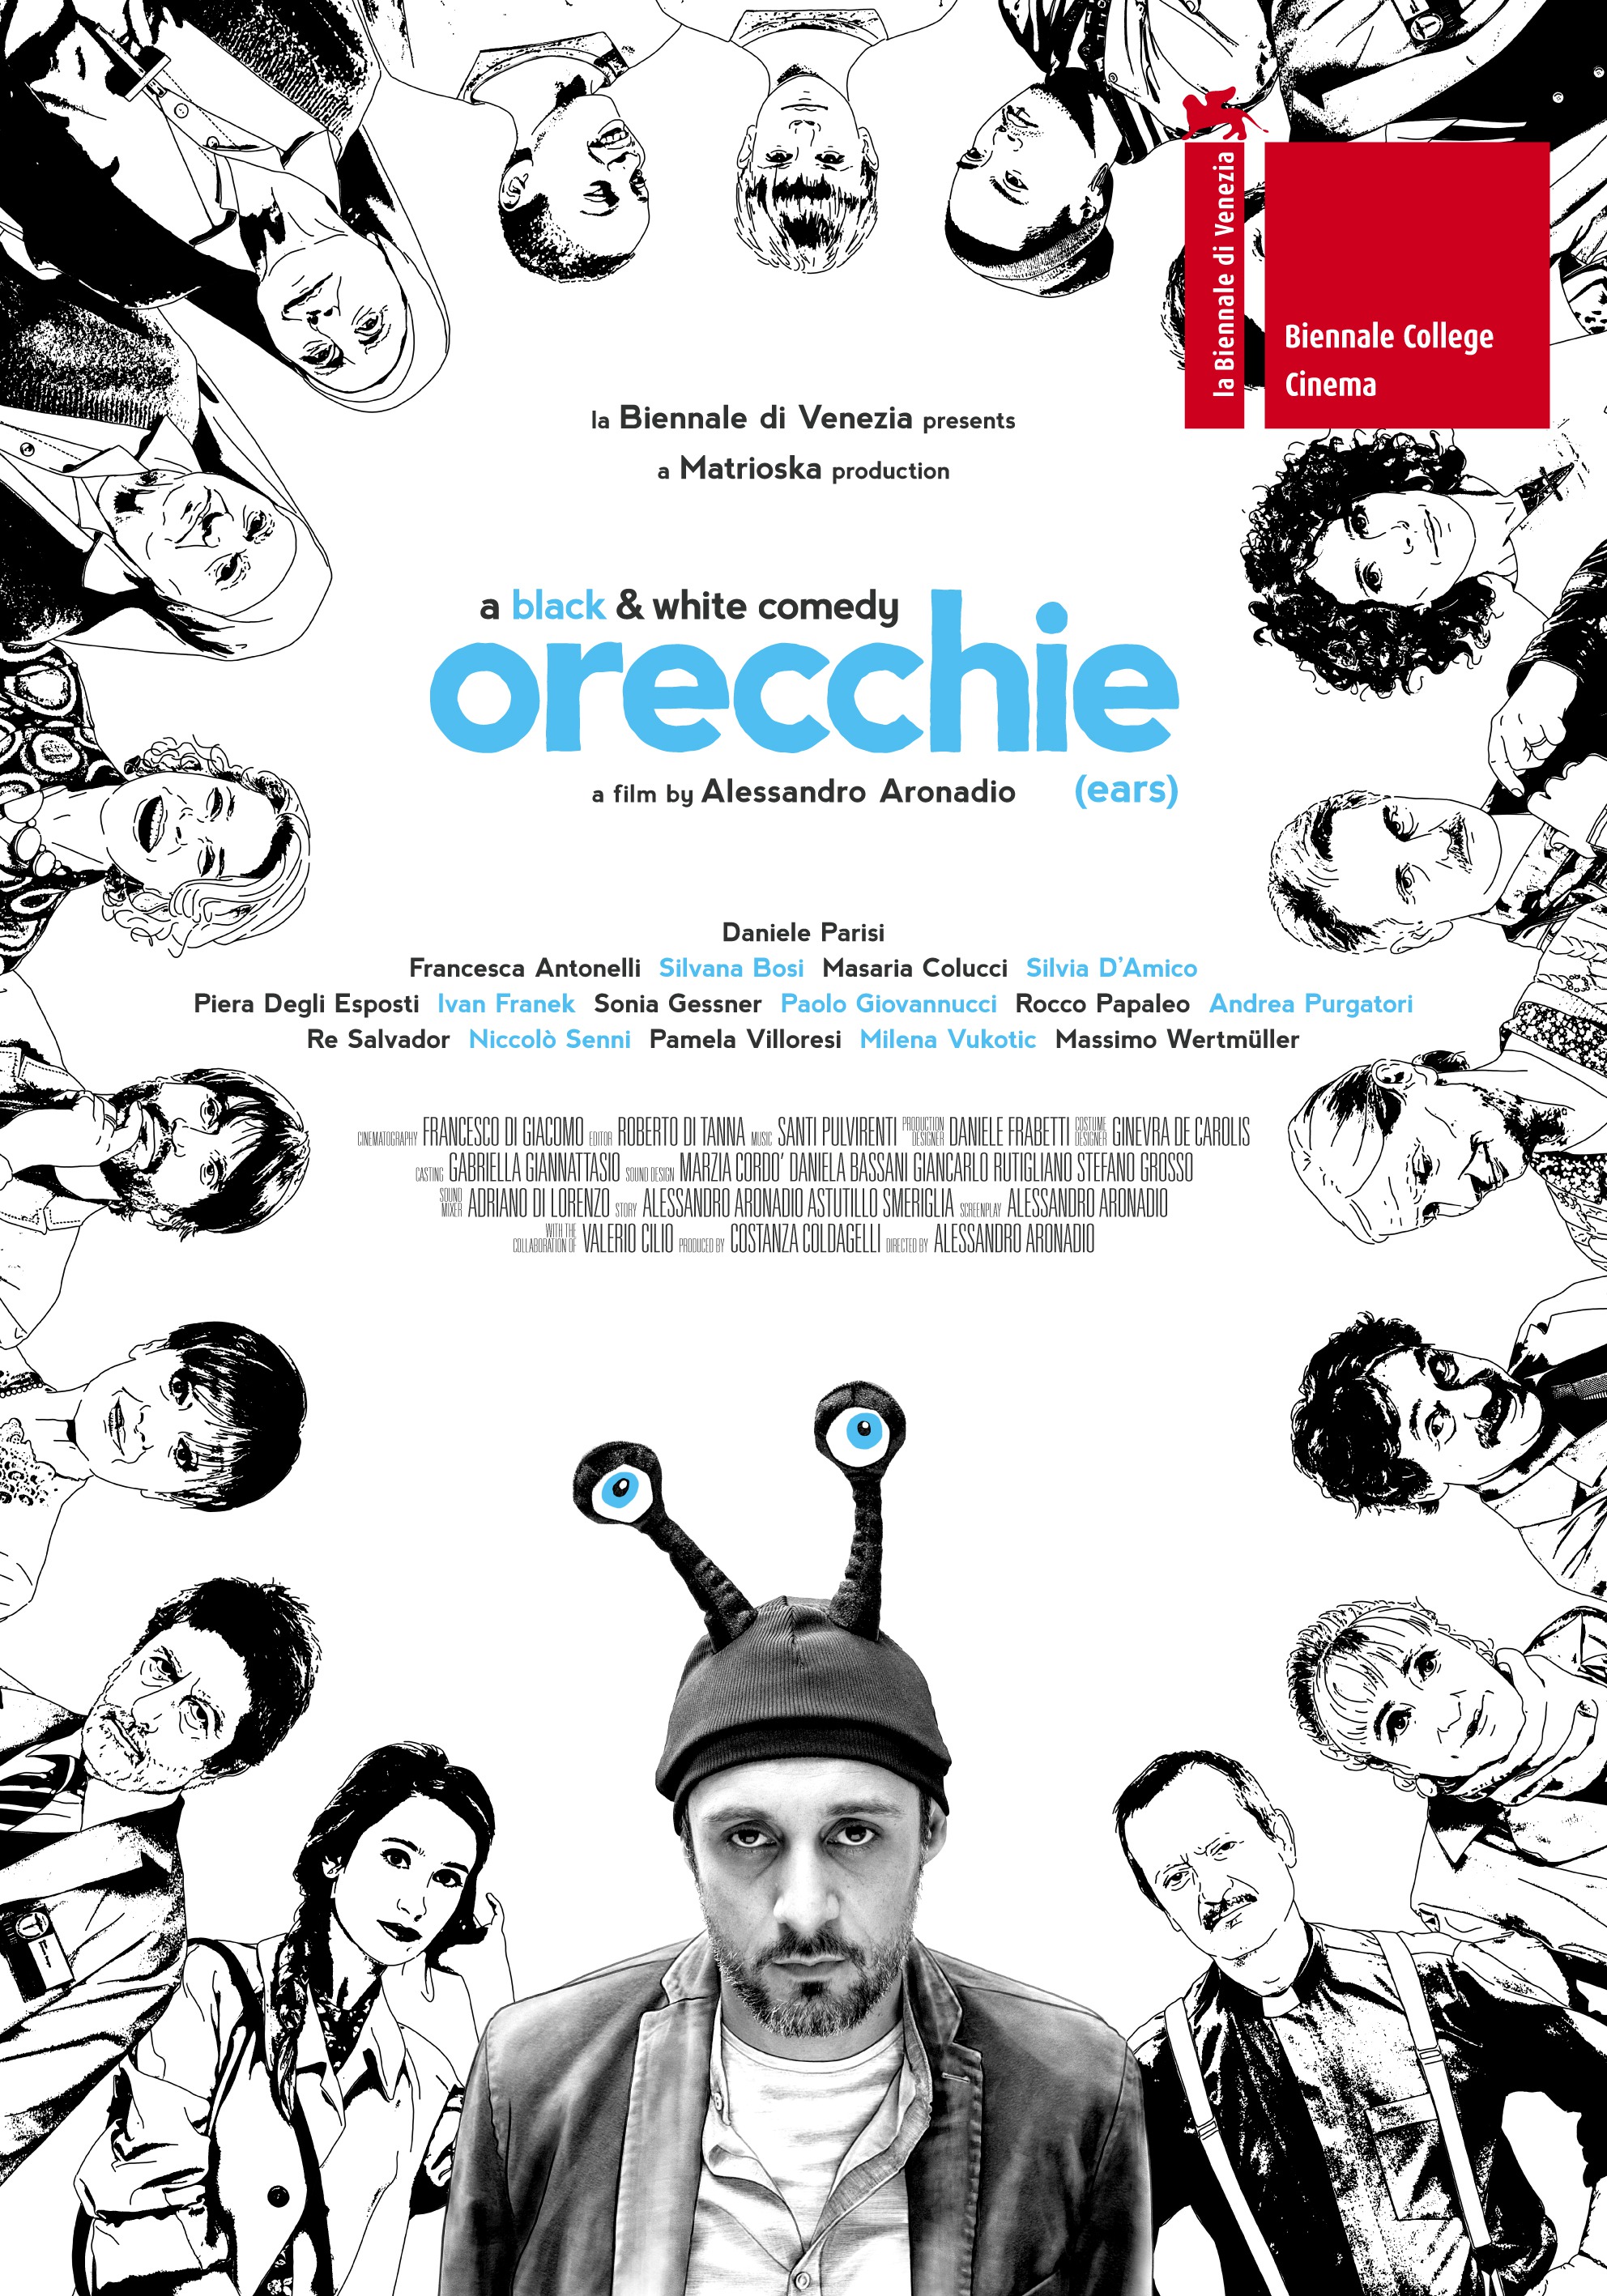 Mega Sized Movie Poster Image for Orecchie (#2 of 2)